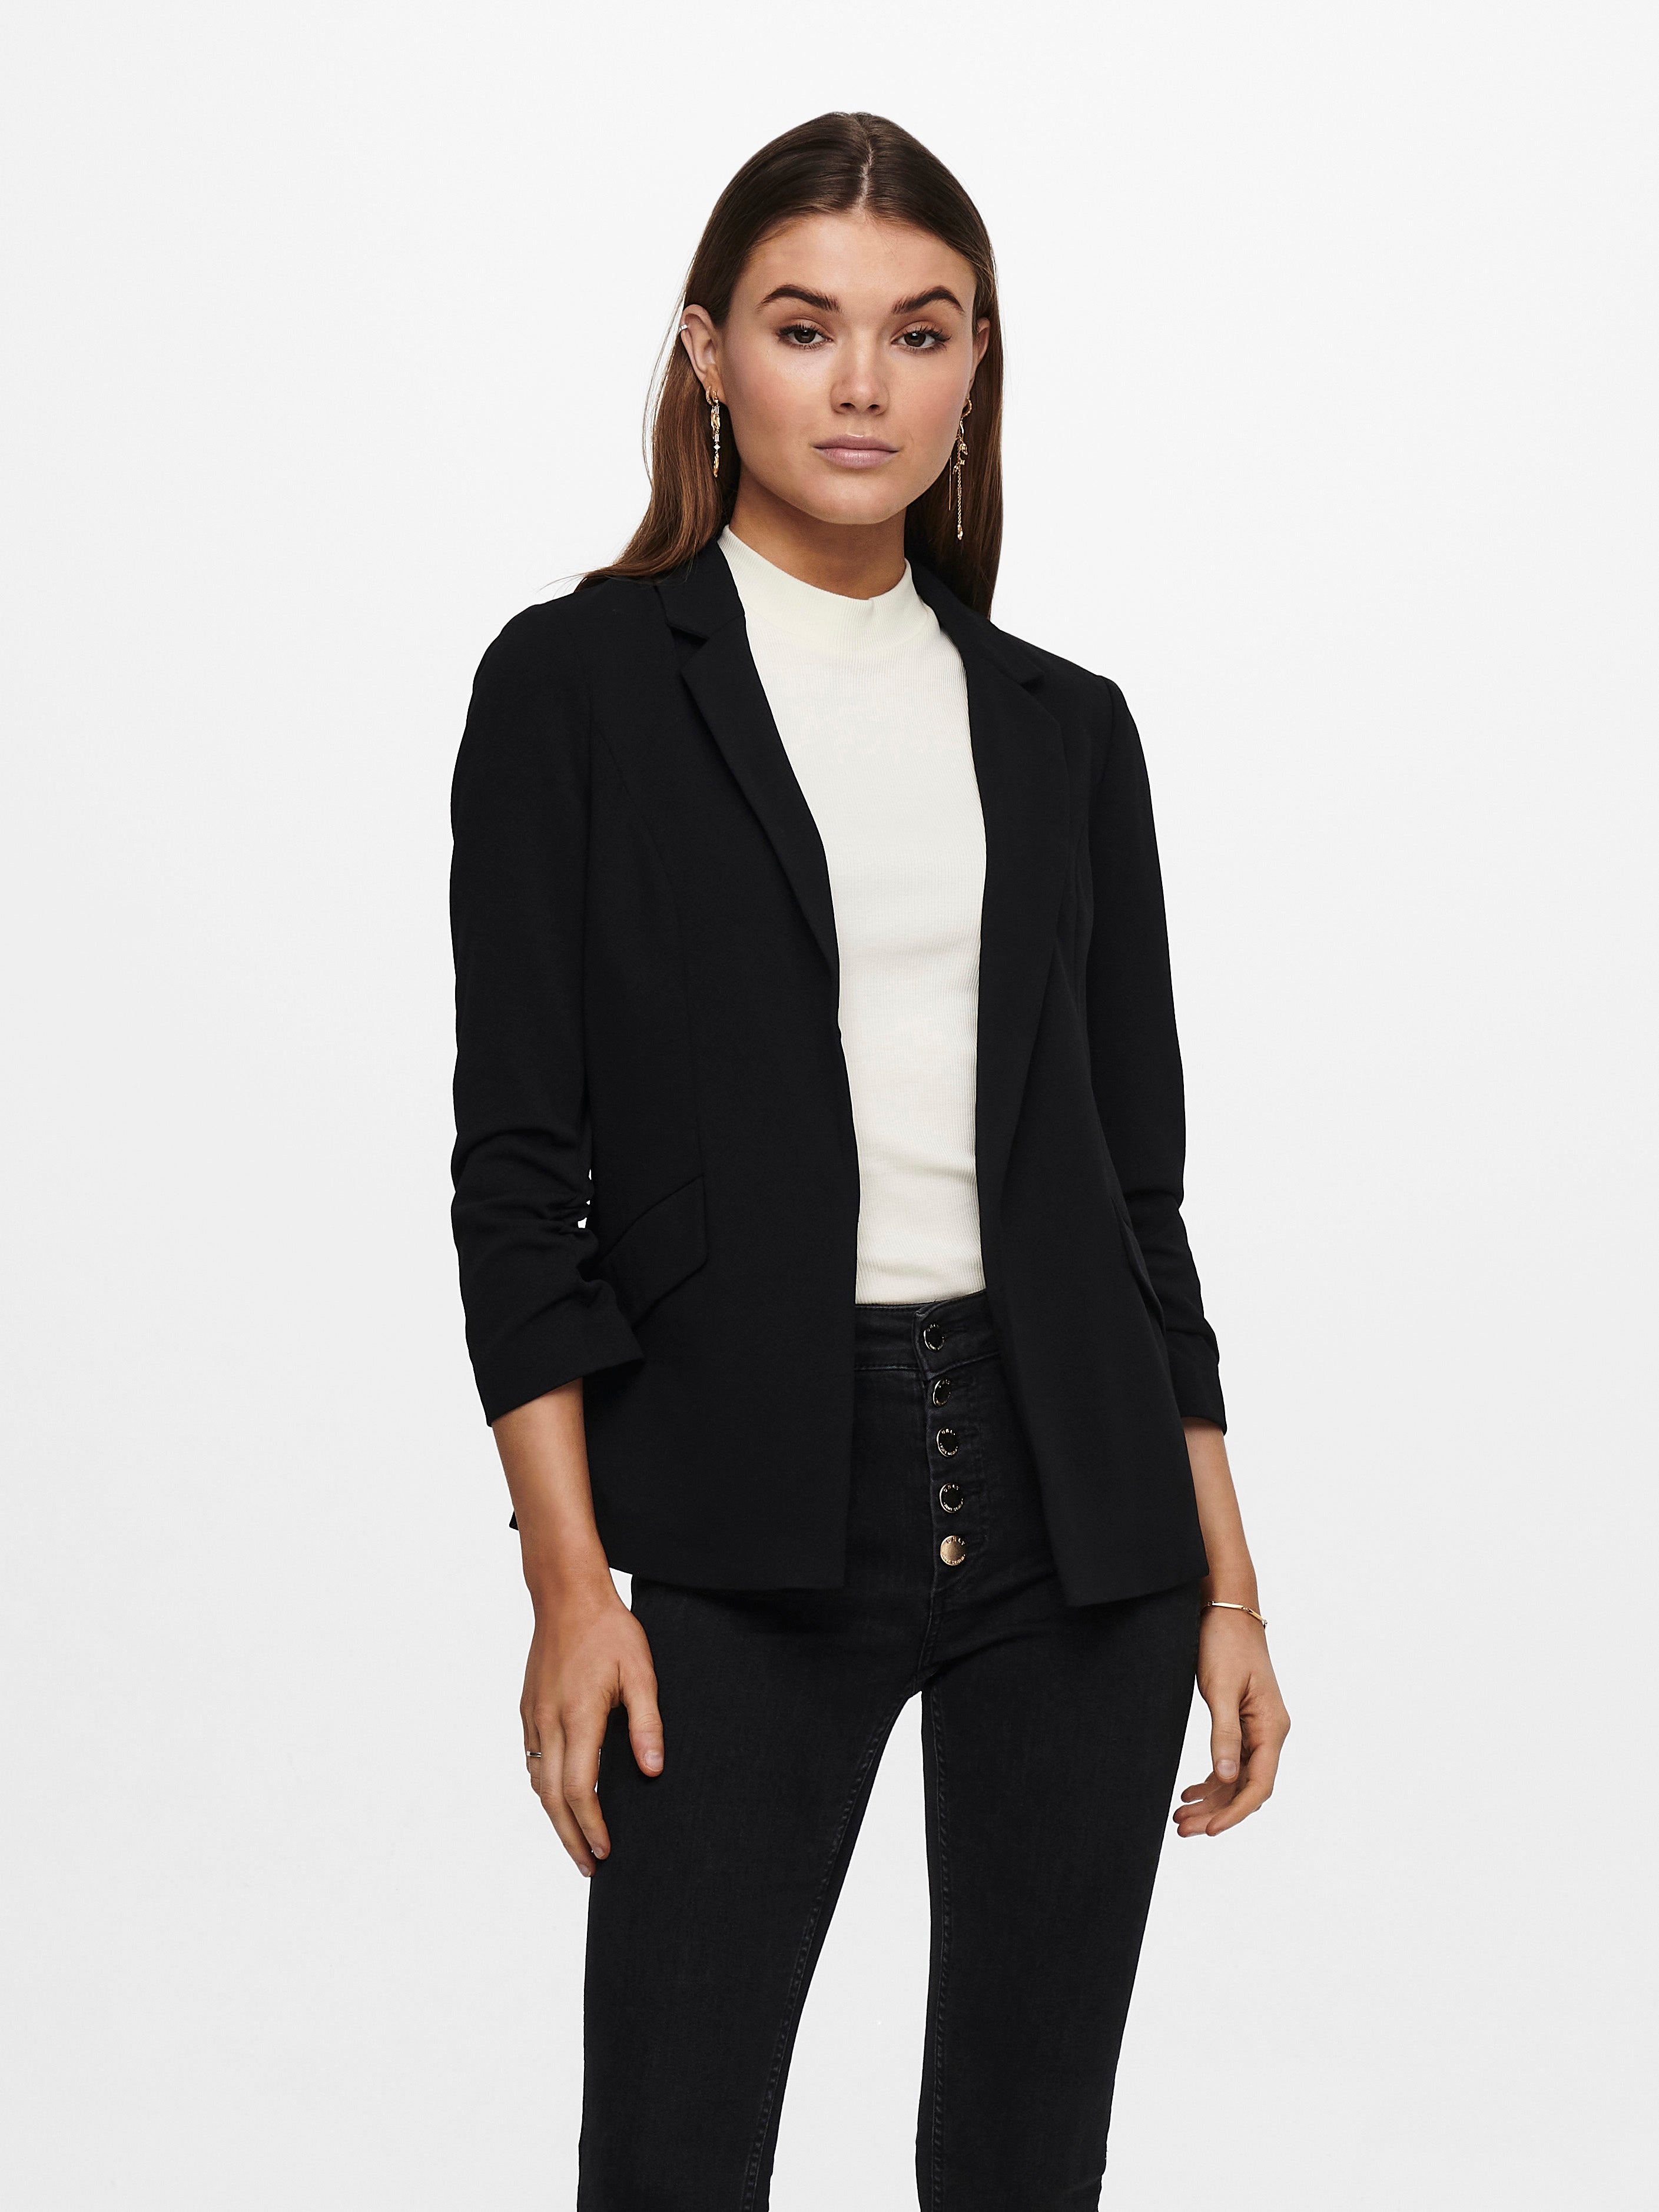 discount 73% WOMEN FASHION Jackets Blazer Fur Black M Suiteblanco blazer 